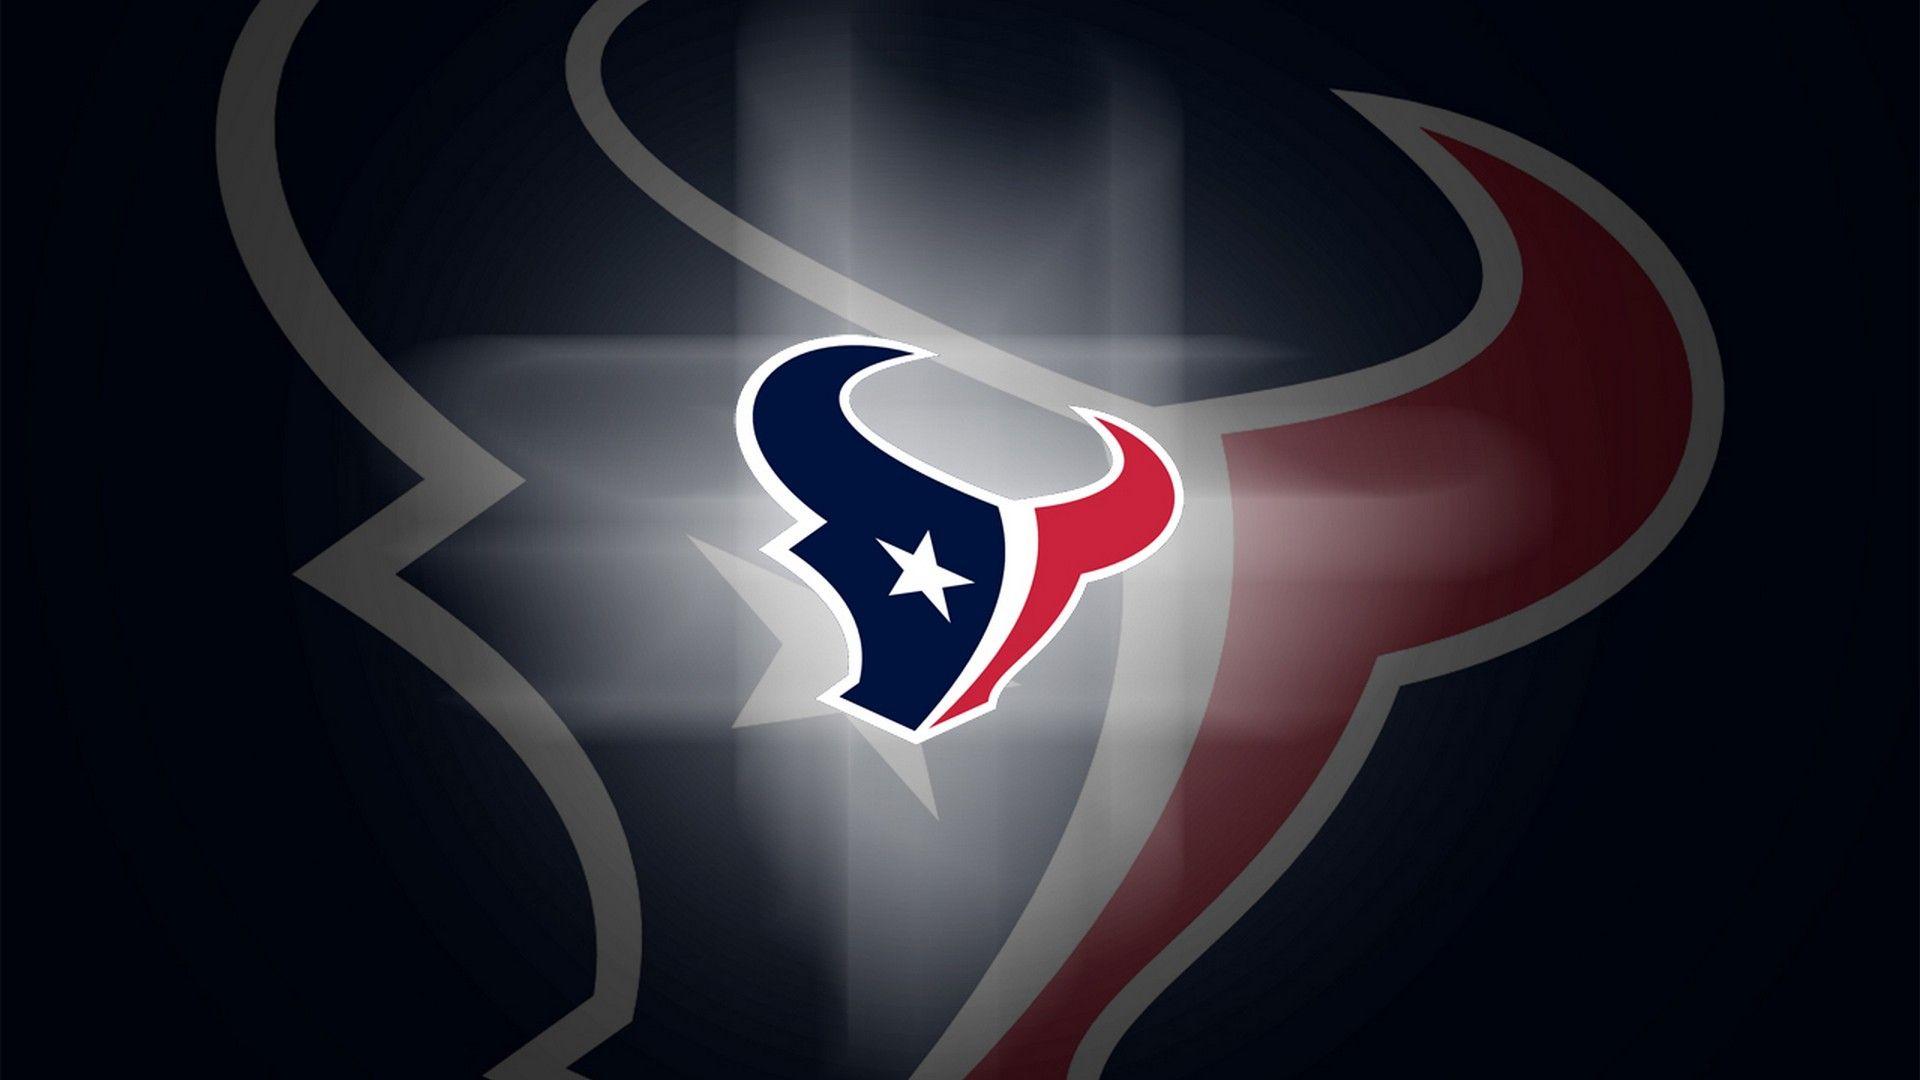 HD Desktop Wallpaper Houston Texans. Texans, Football